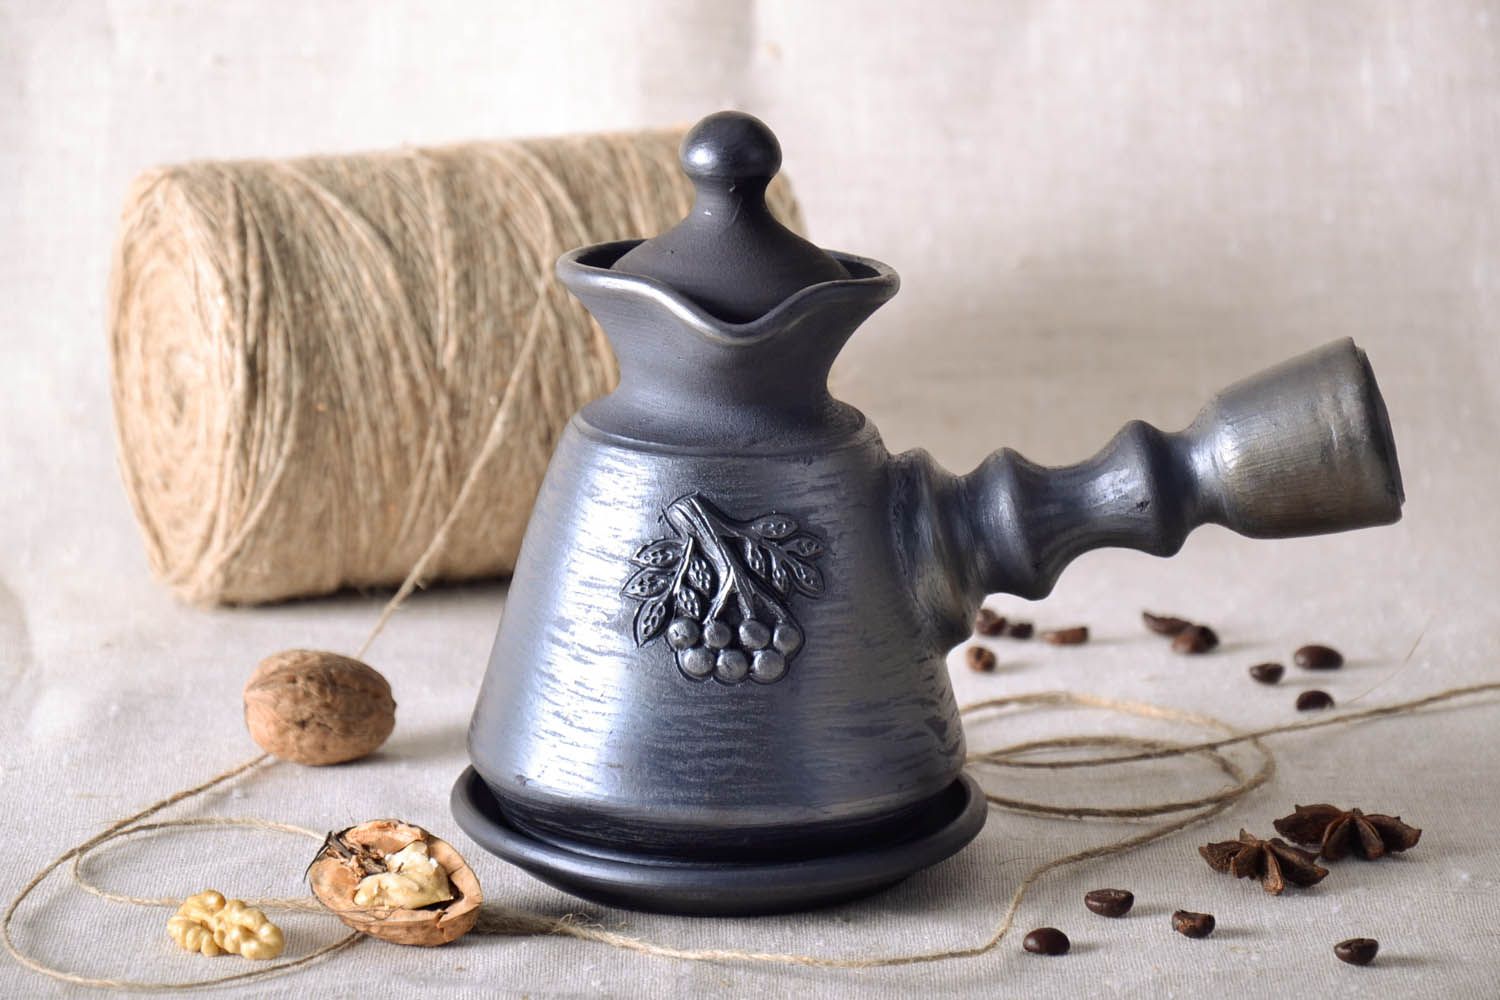 Cezve de argila feito à mão louça de cerâmica decorativa artesanal Viburno foto 1